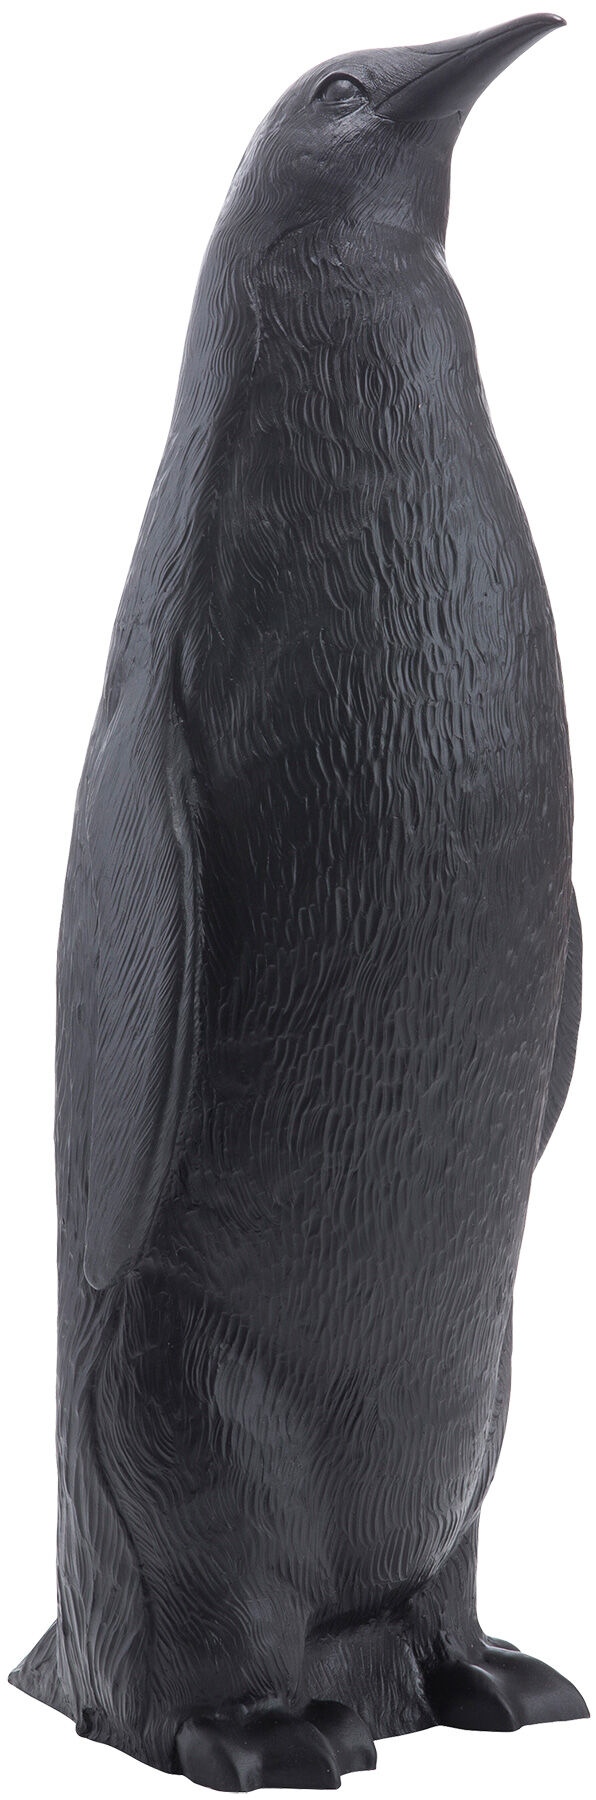 Sculpture "Penguin II Upright" (2006), black version by Ottmar Hörl